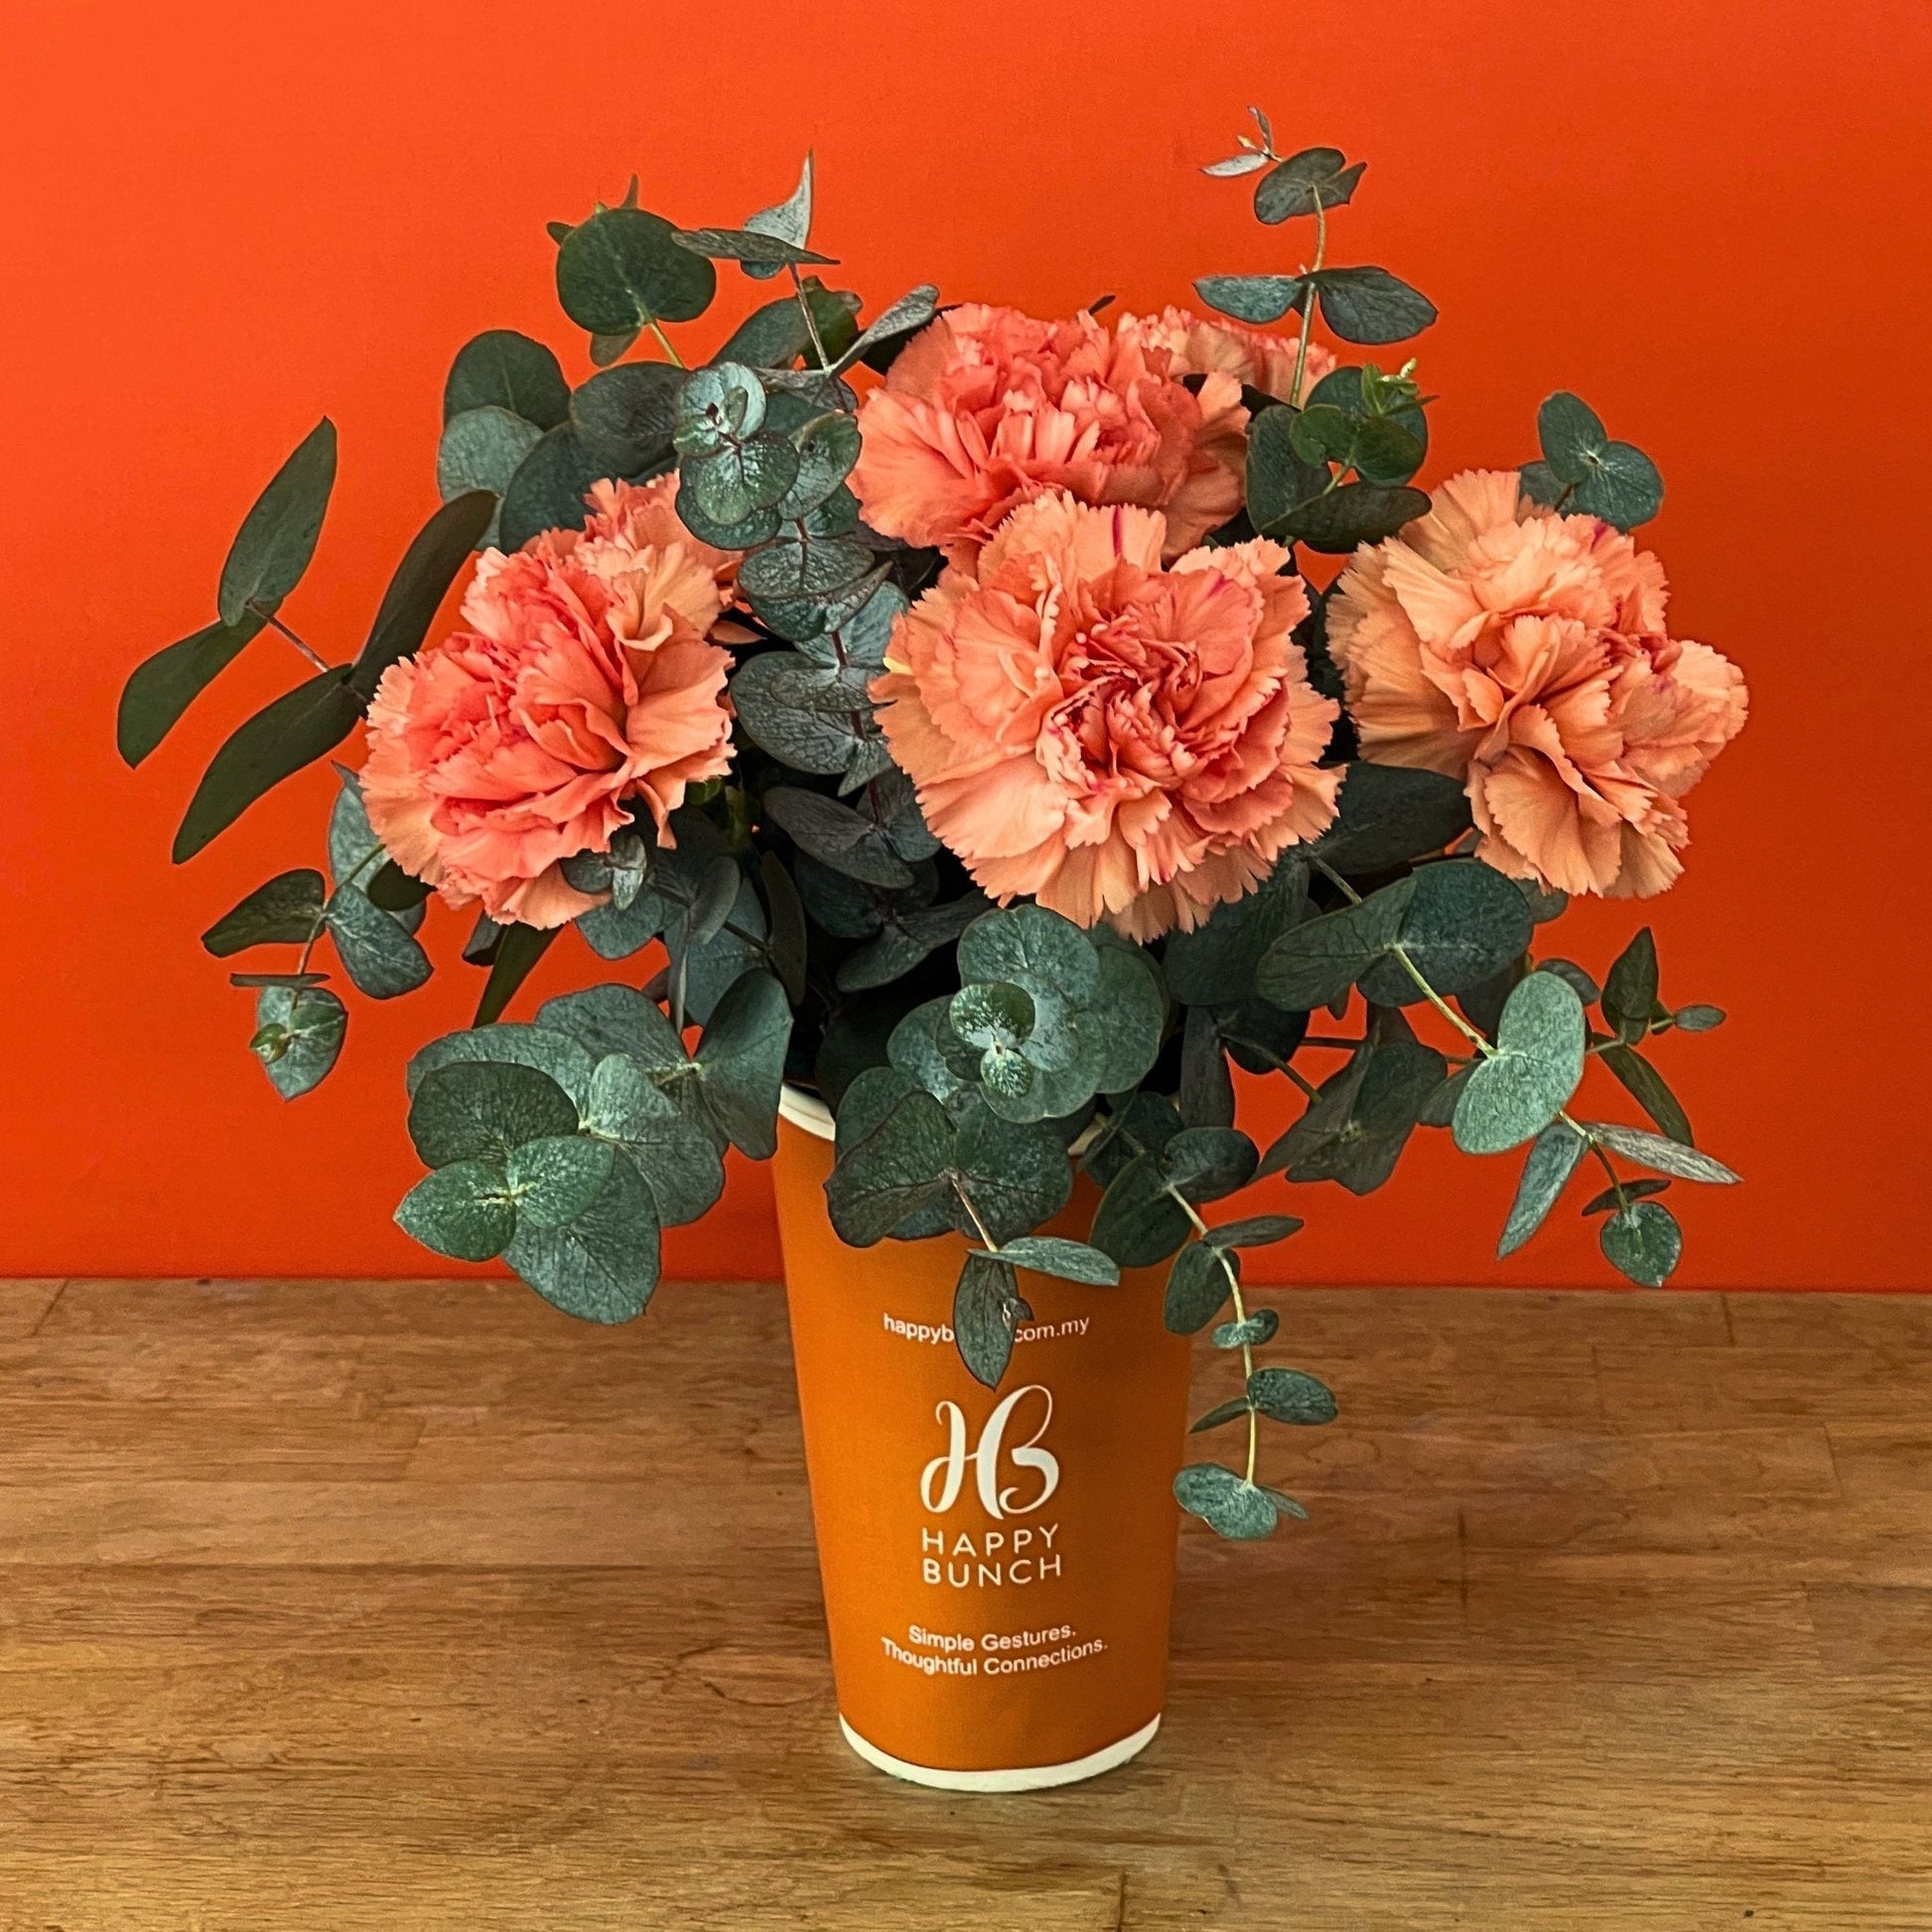 Orange Carnation Bouquet - Happy Bunch Malaysia (1102420U)